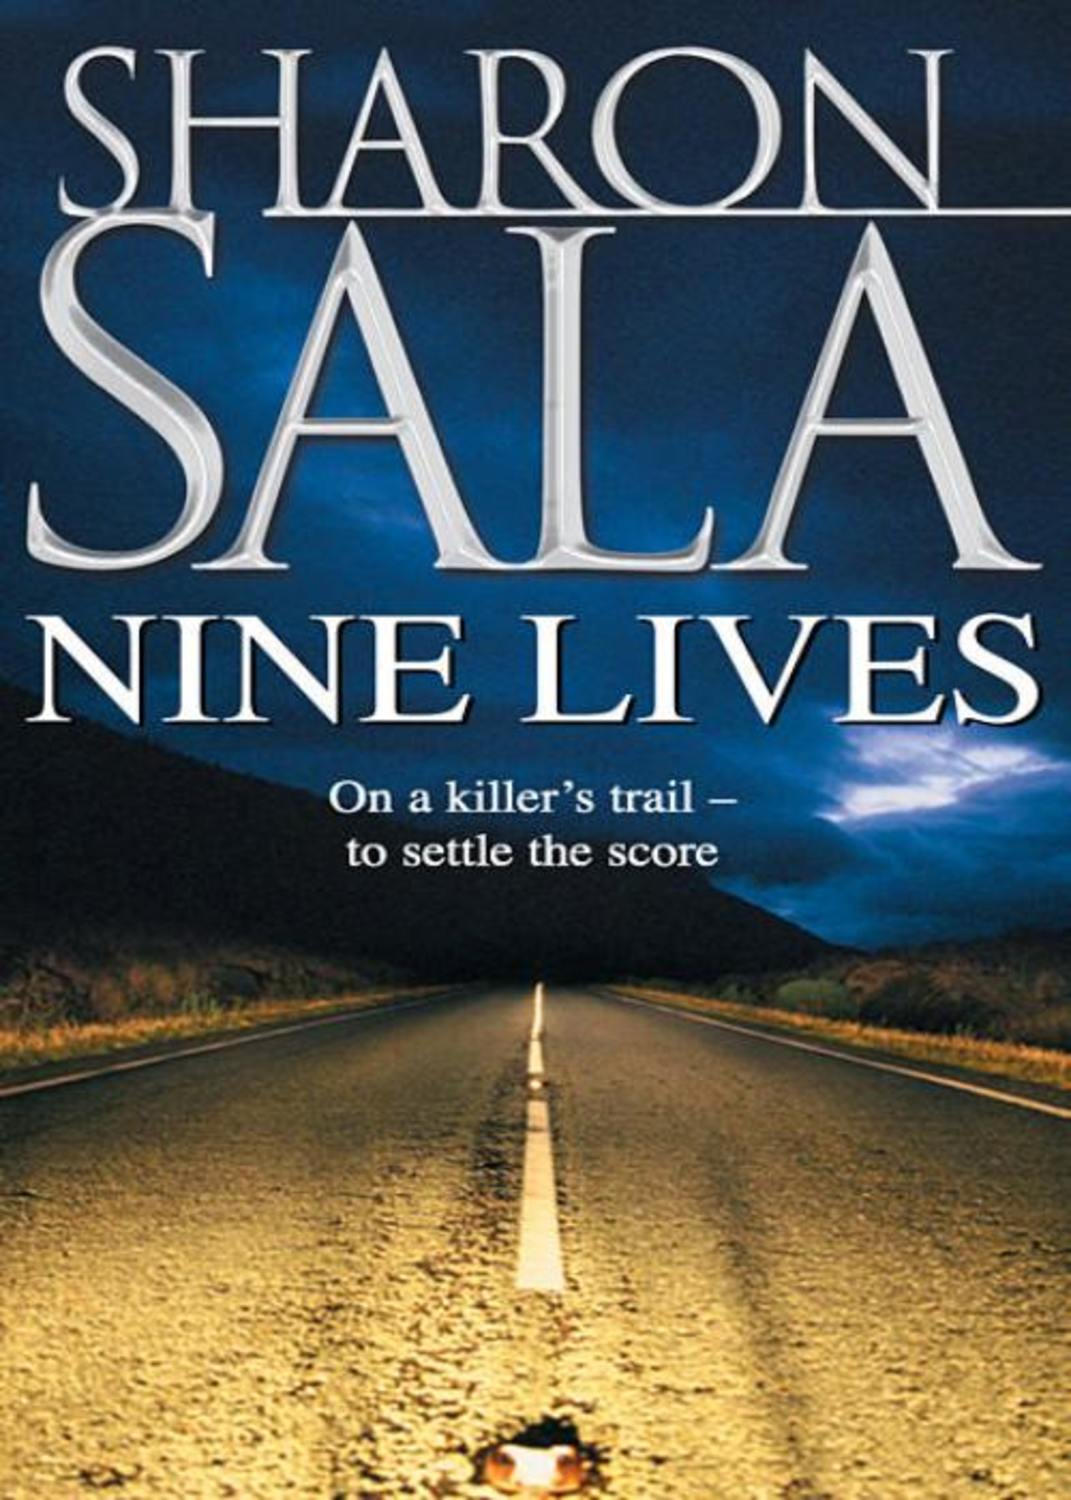 Sharon Sala / Sharon Sala, Nine Lives read online at LitRes / Author